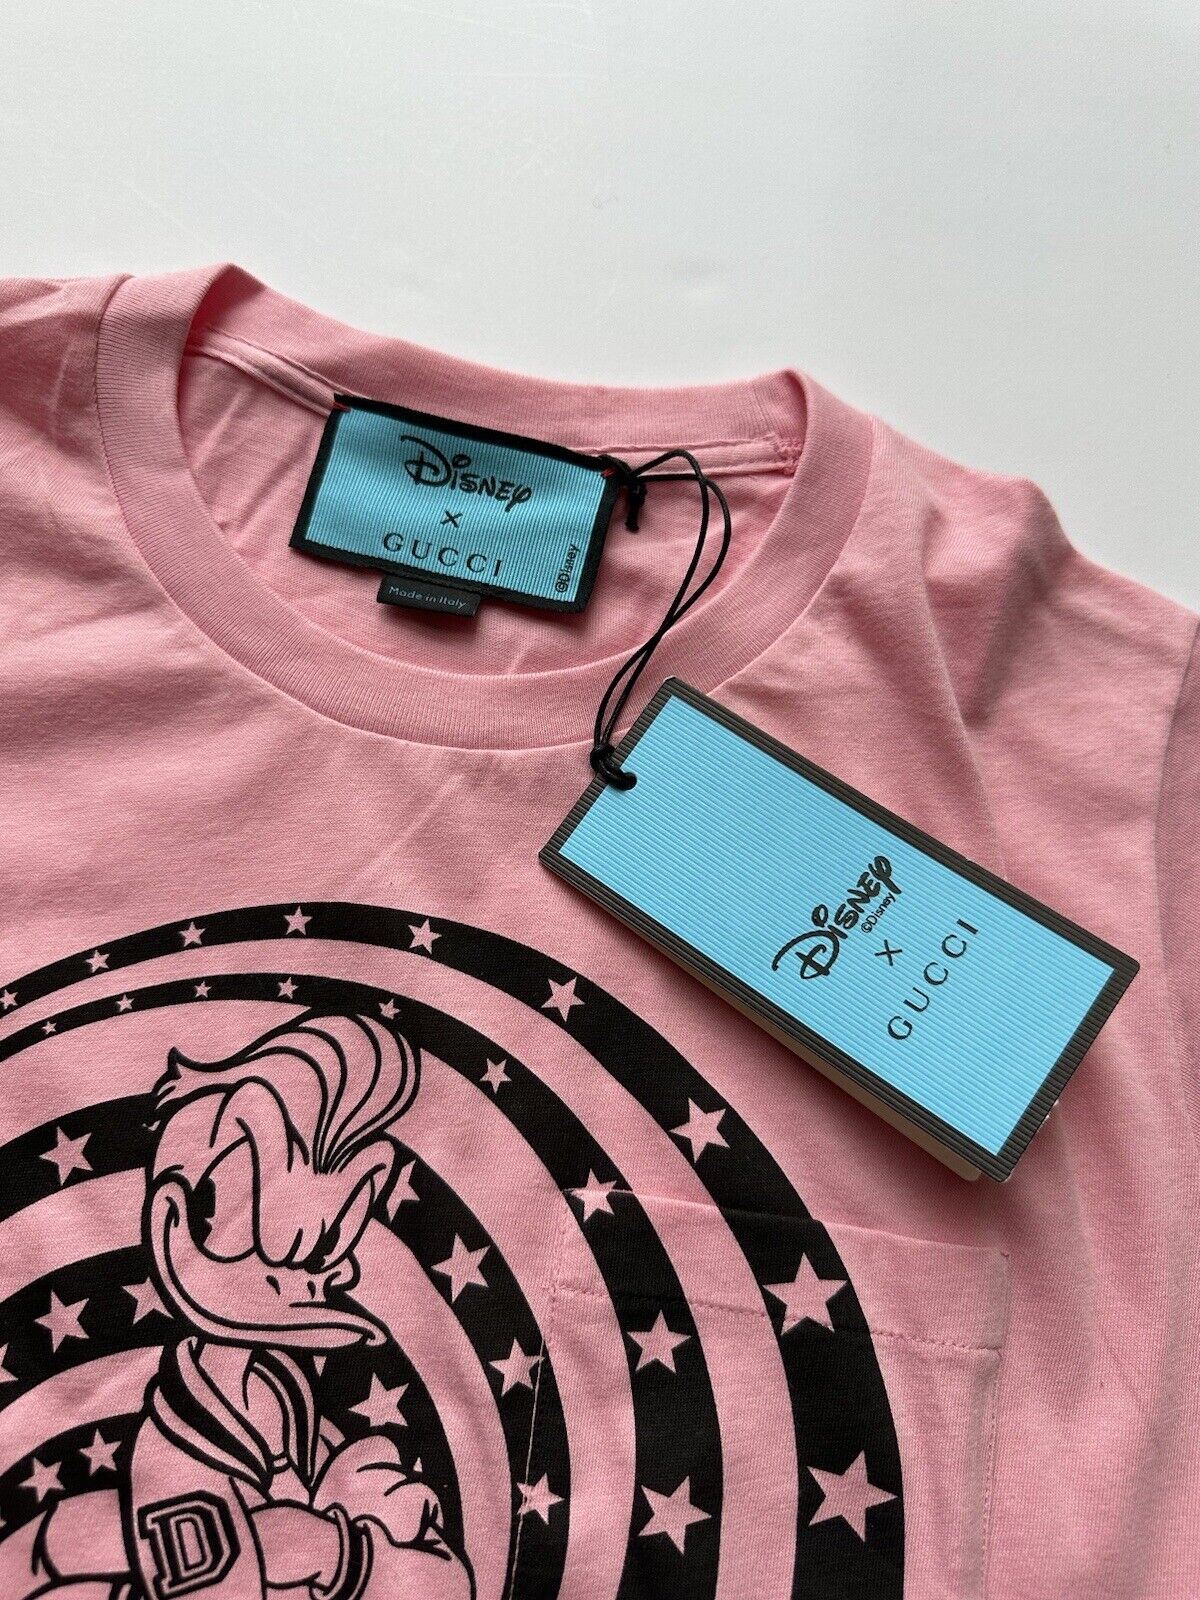 Neu mit Etikett: Gucci Donald Duck Jersey Rosa T-Shirt XS 644674 Hergestellt in Italien